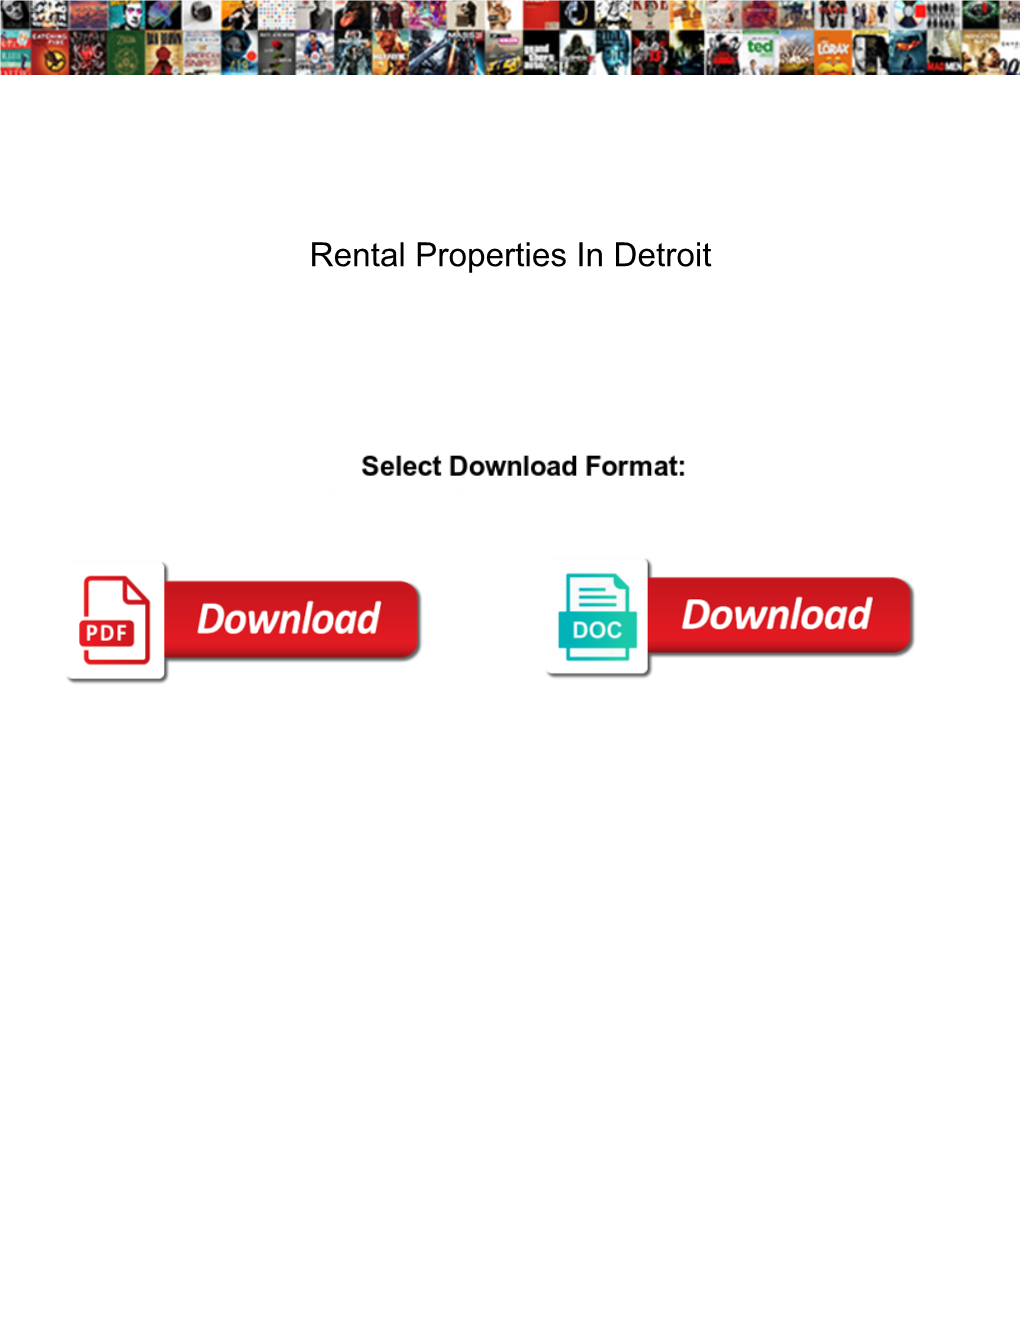 Rental Properties in Detroit